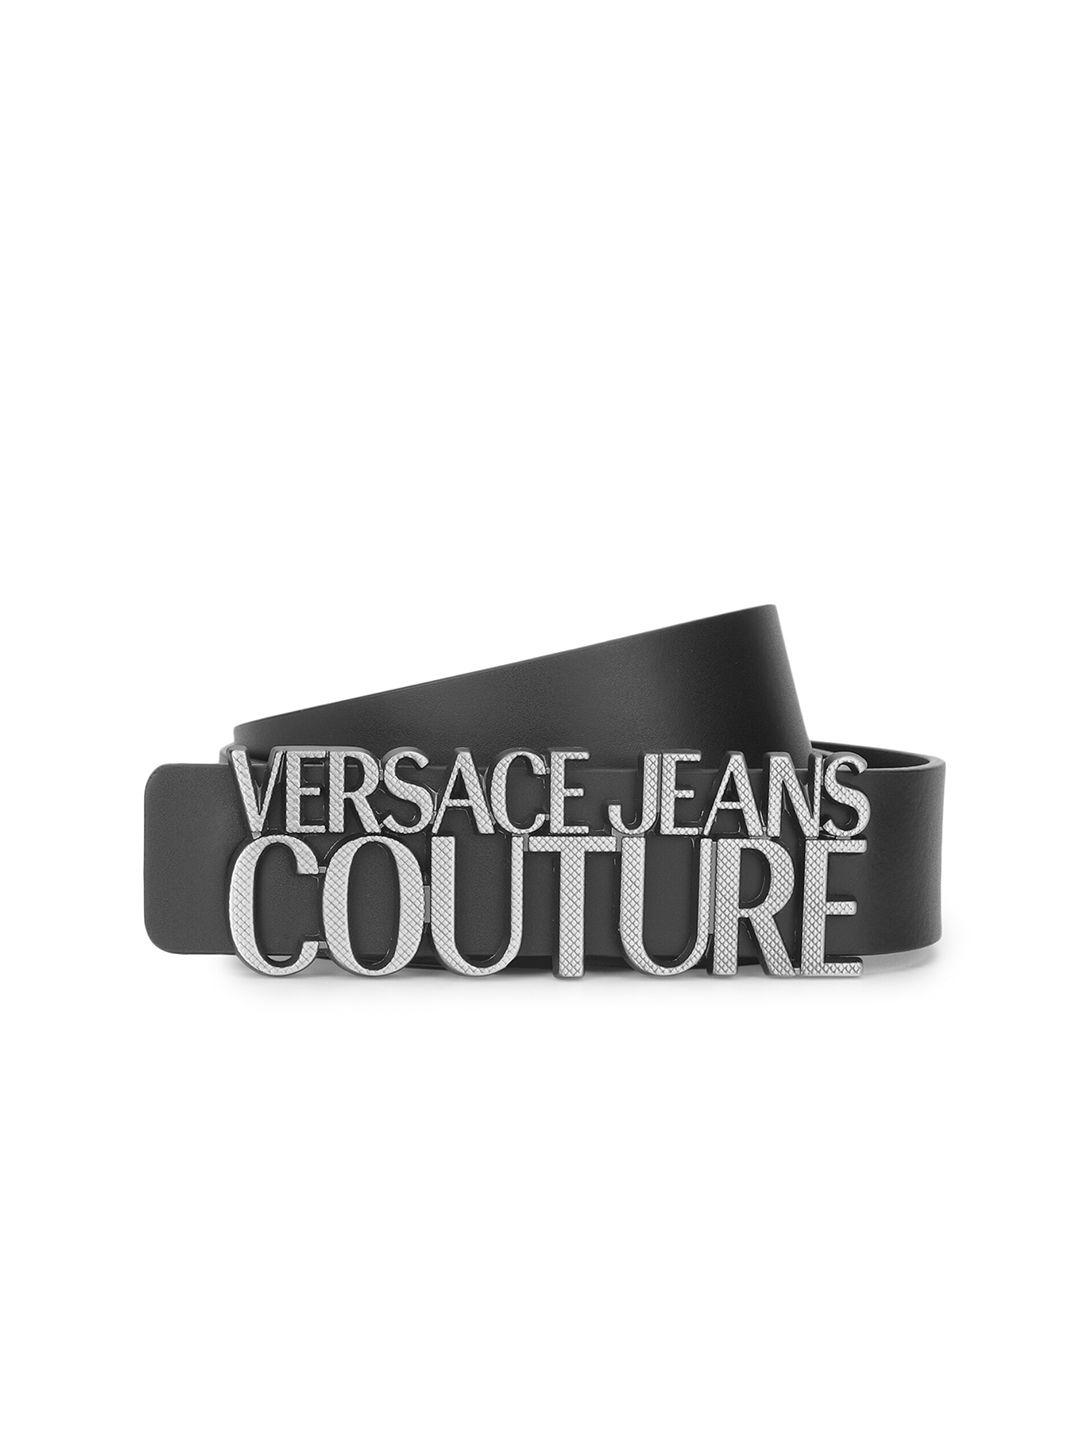 versace-jeans-couture-men-buckle-leather-belt